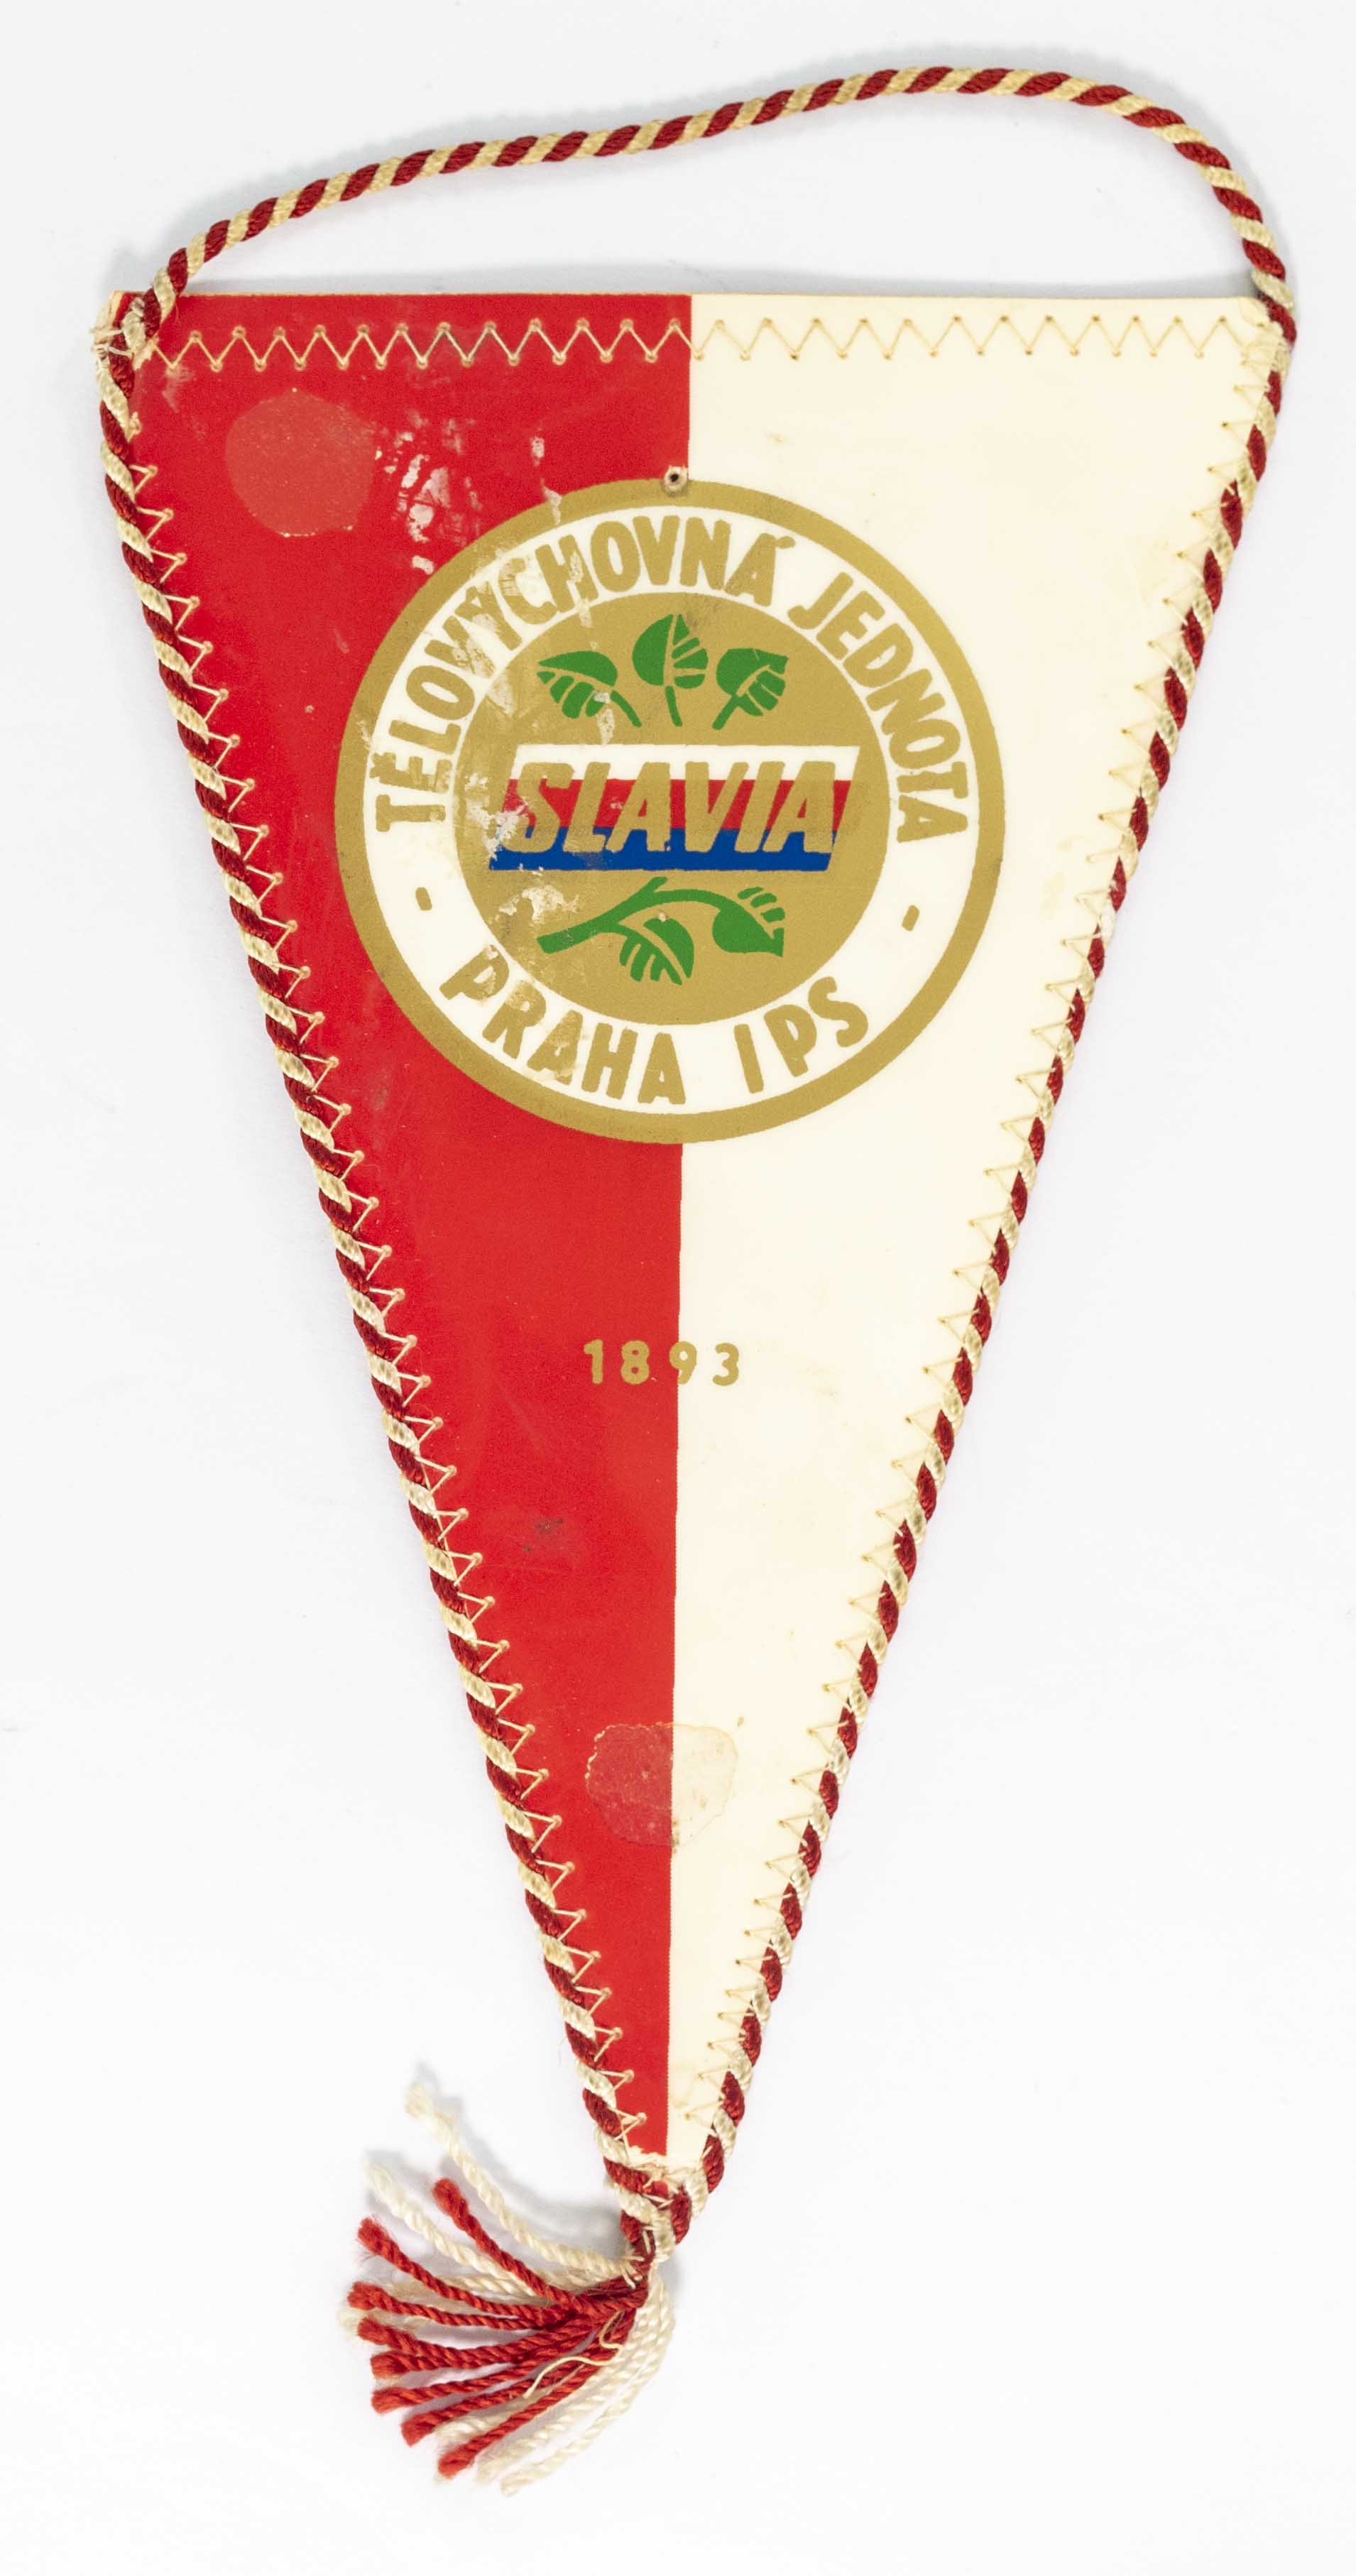 Autovlajka TJ Slavia Praha IPS 1893